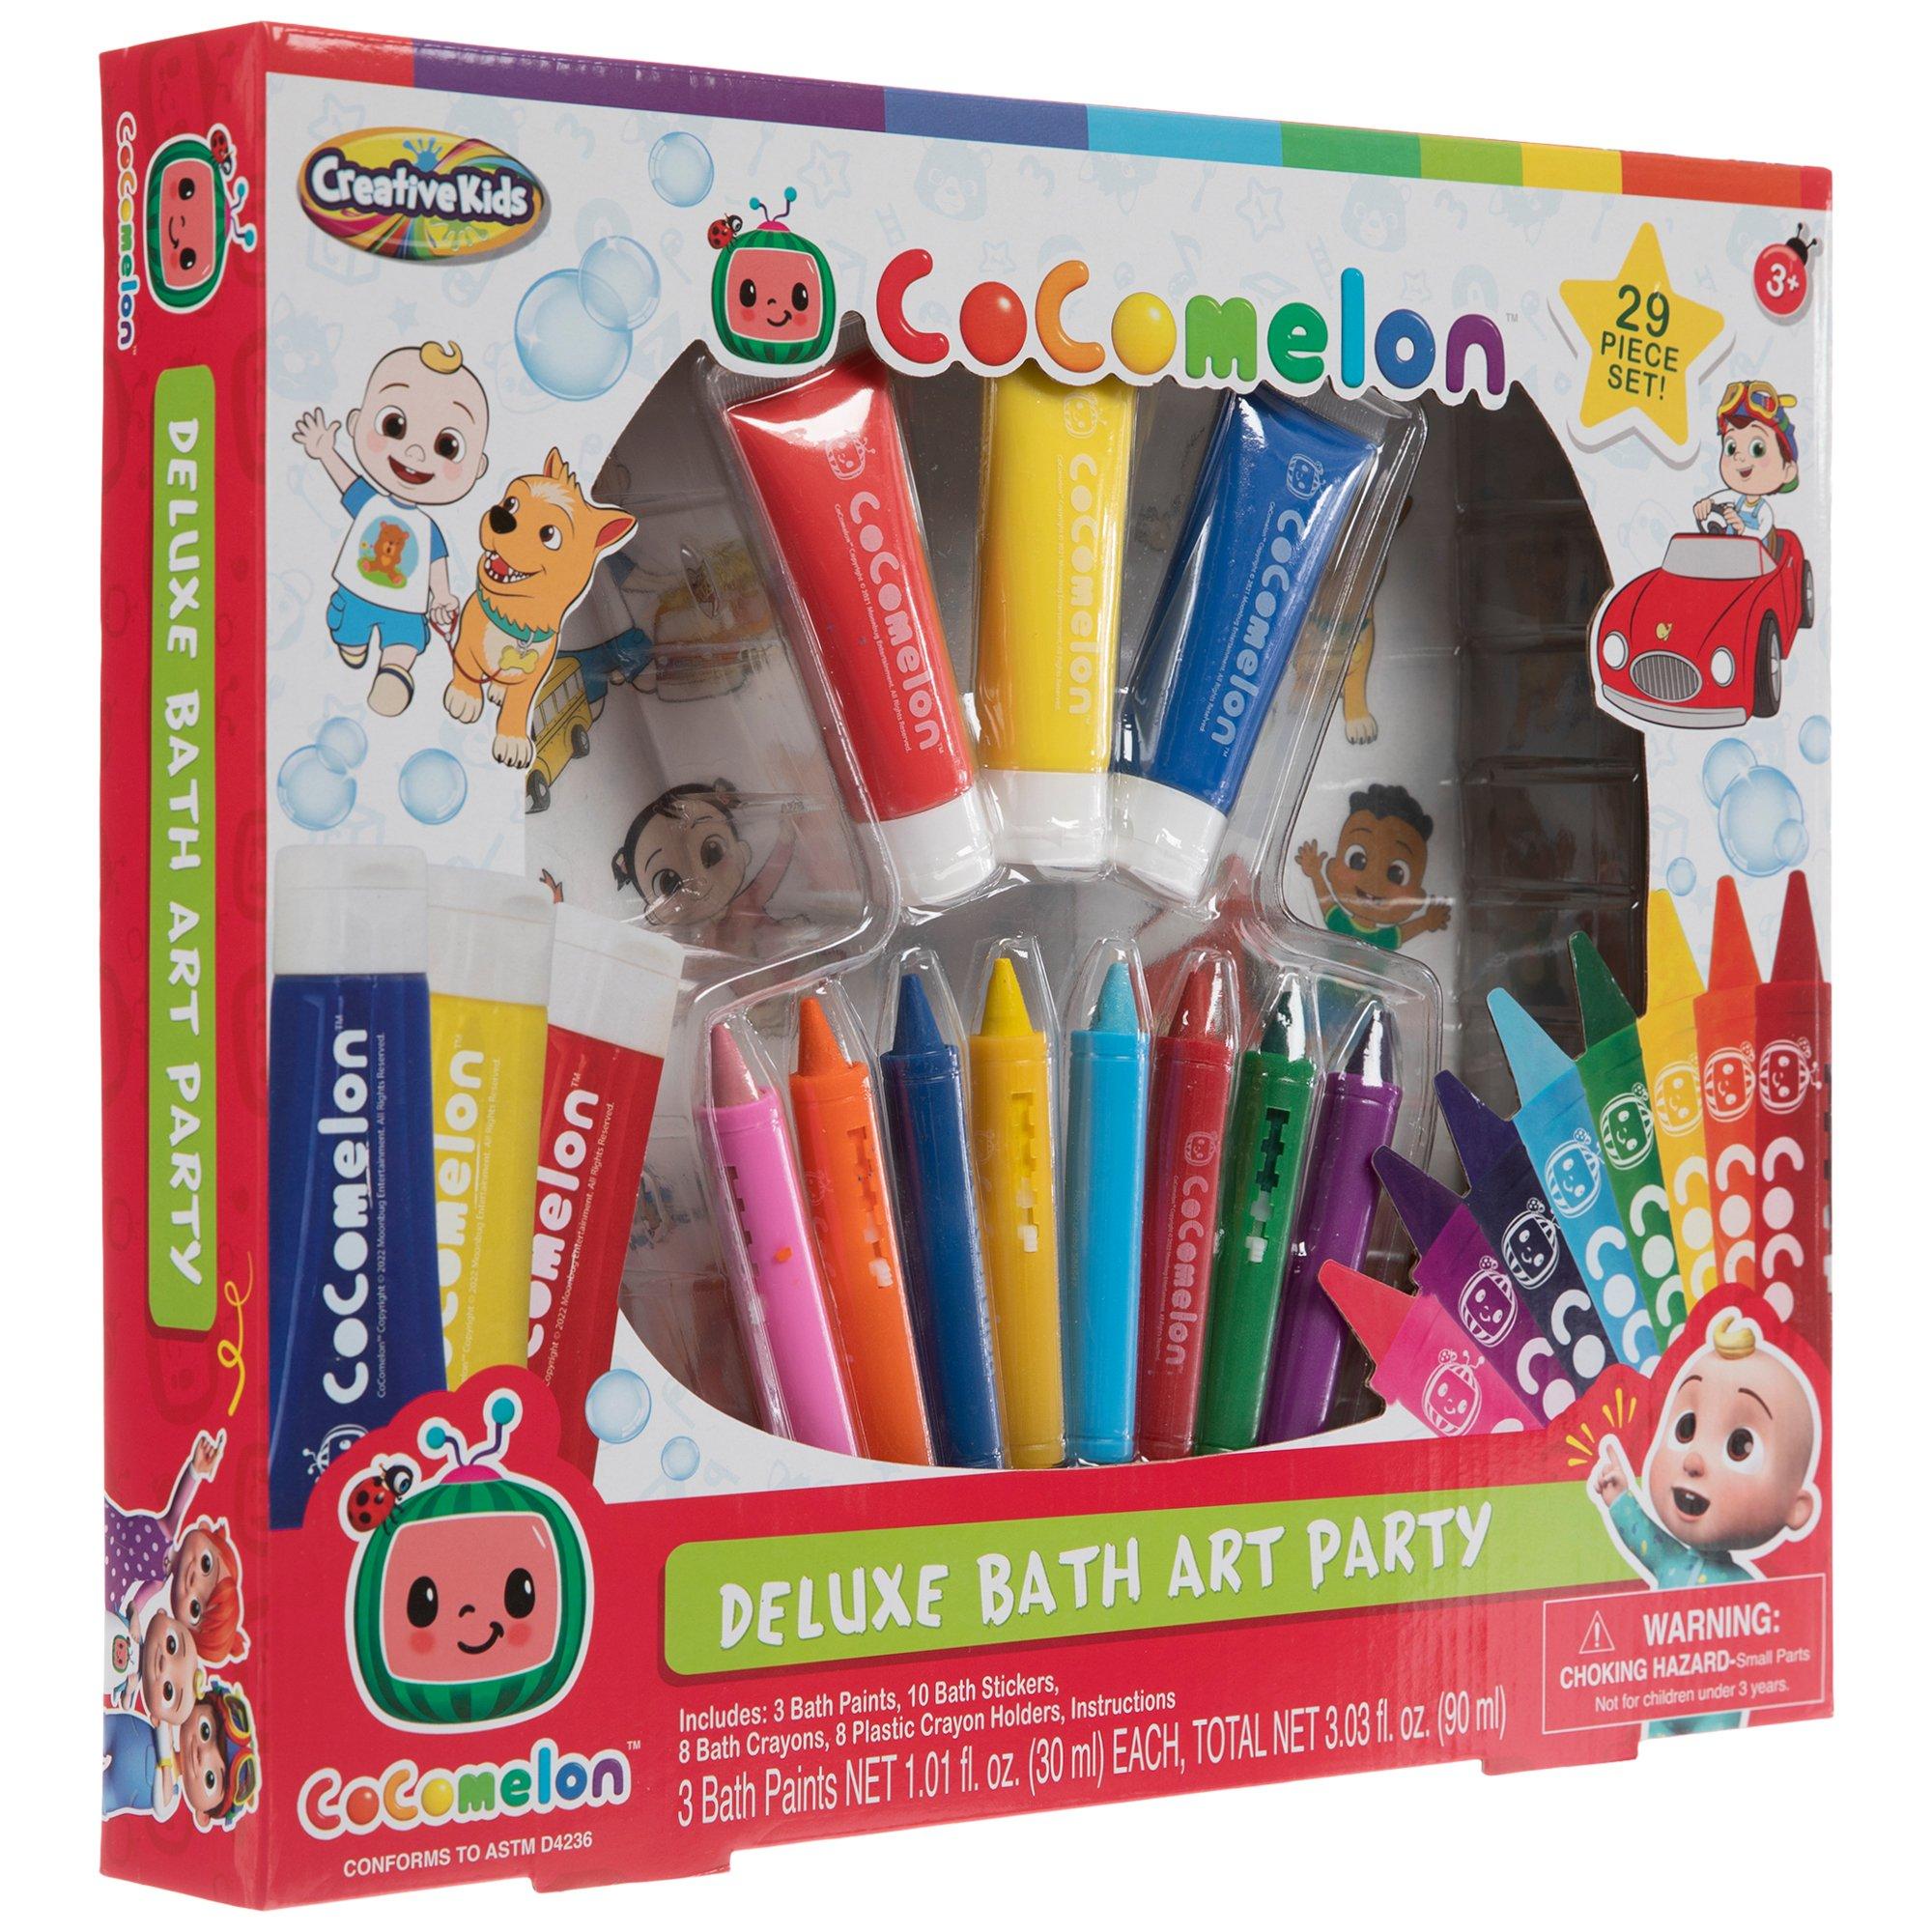 Crayola Color Wonder Markers - 10 Piece Set, Hobby Lobby